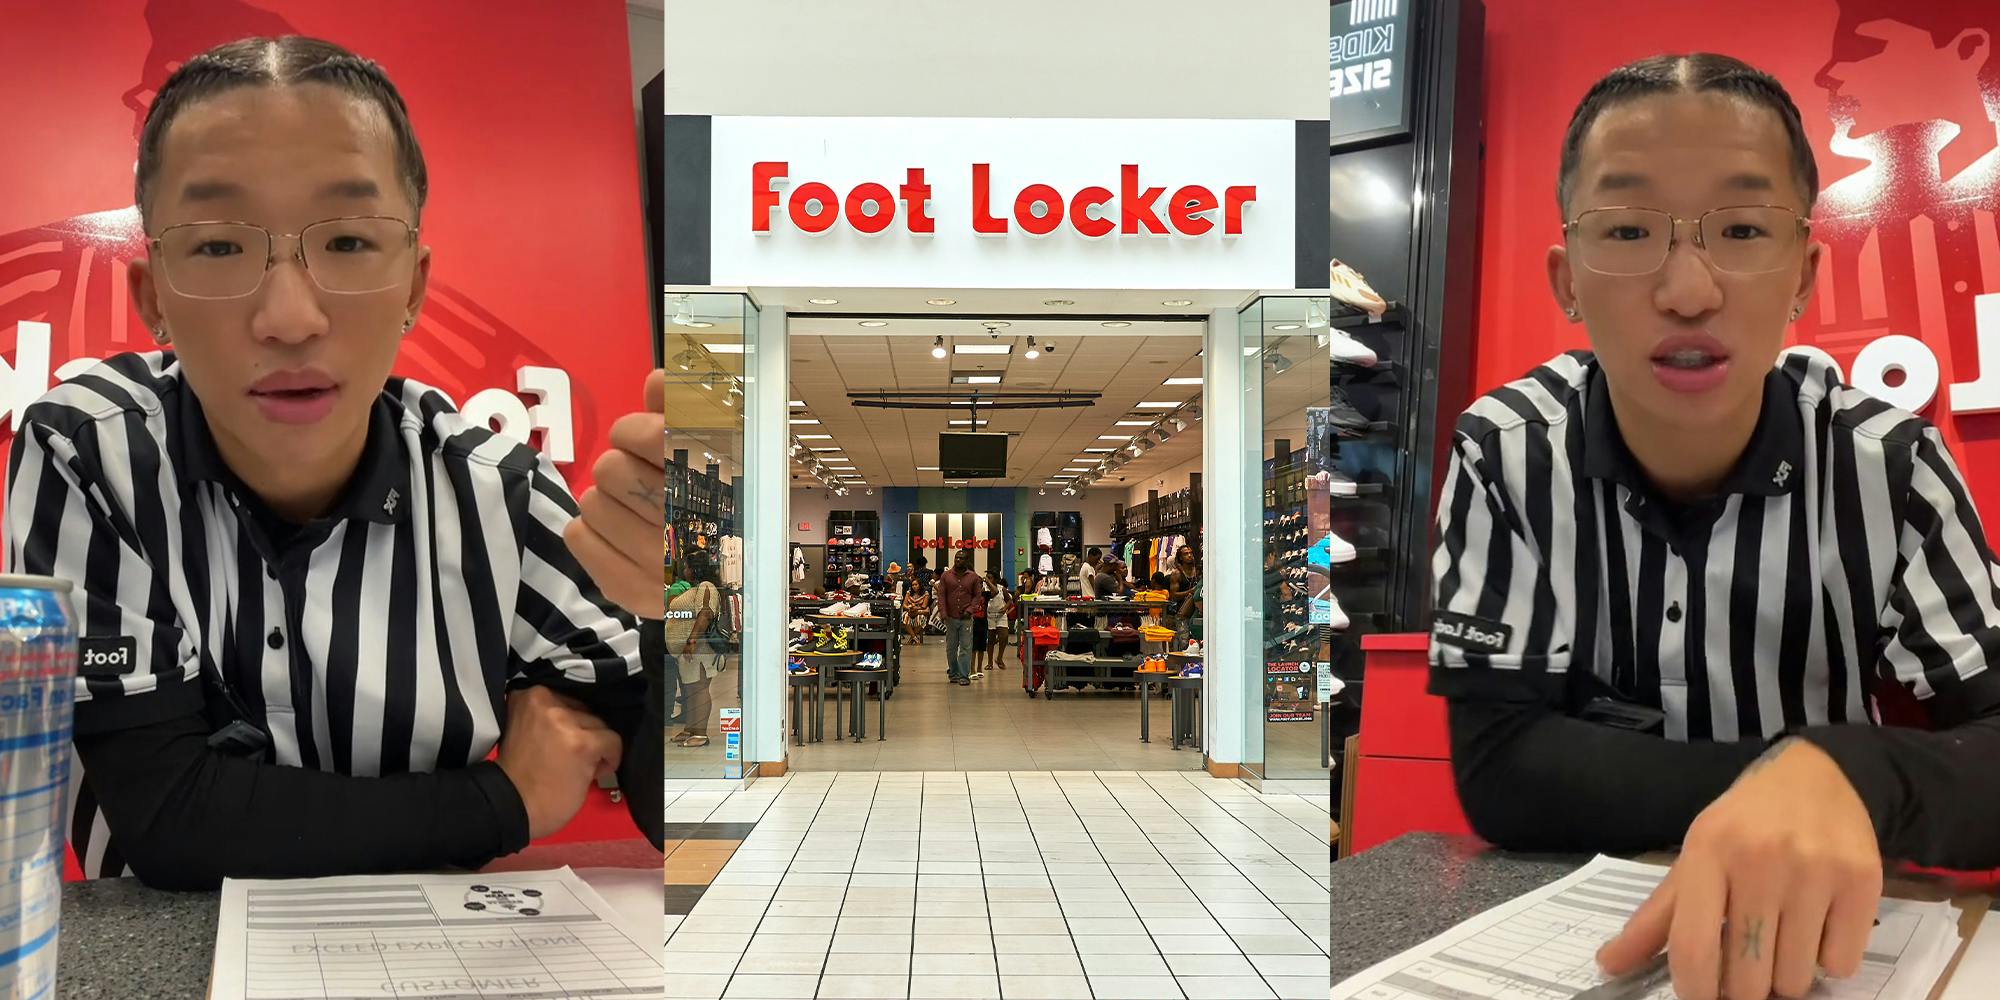 Foot Locker Shuts Down Lady Foot Locker Brand - Retail TouchPoints